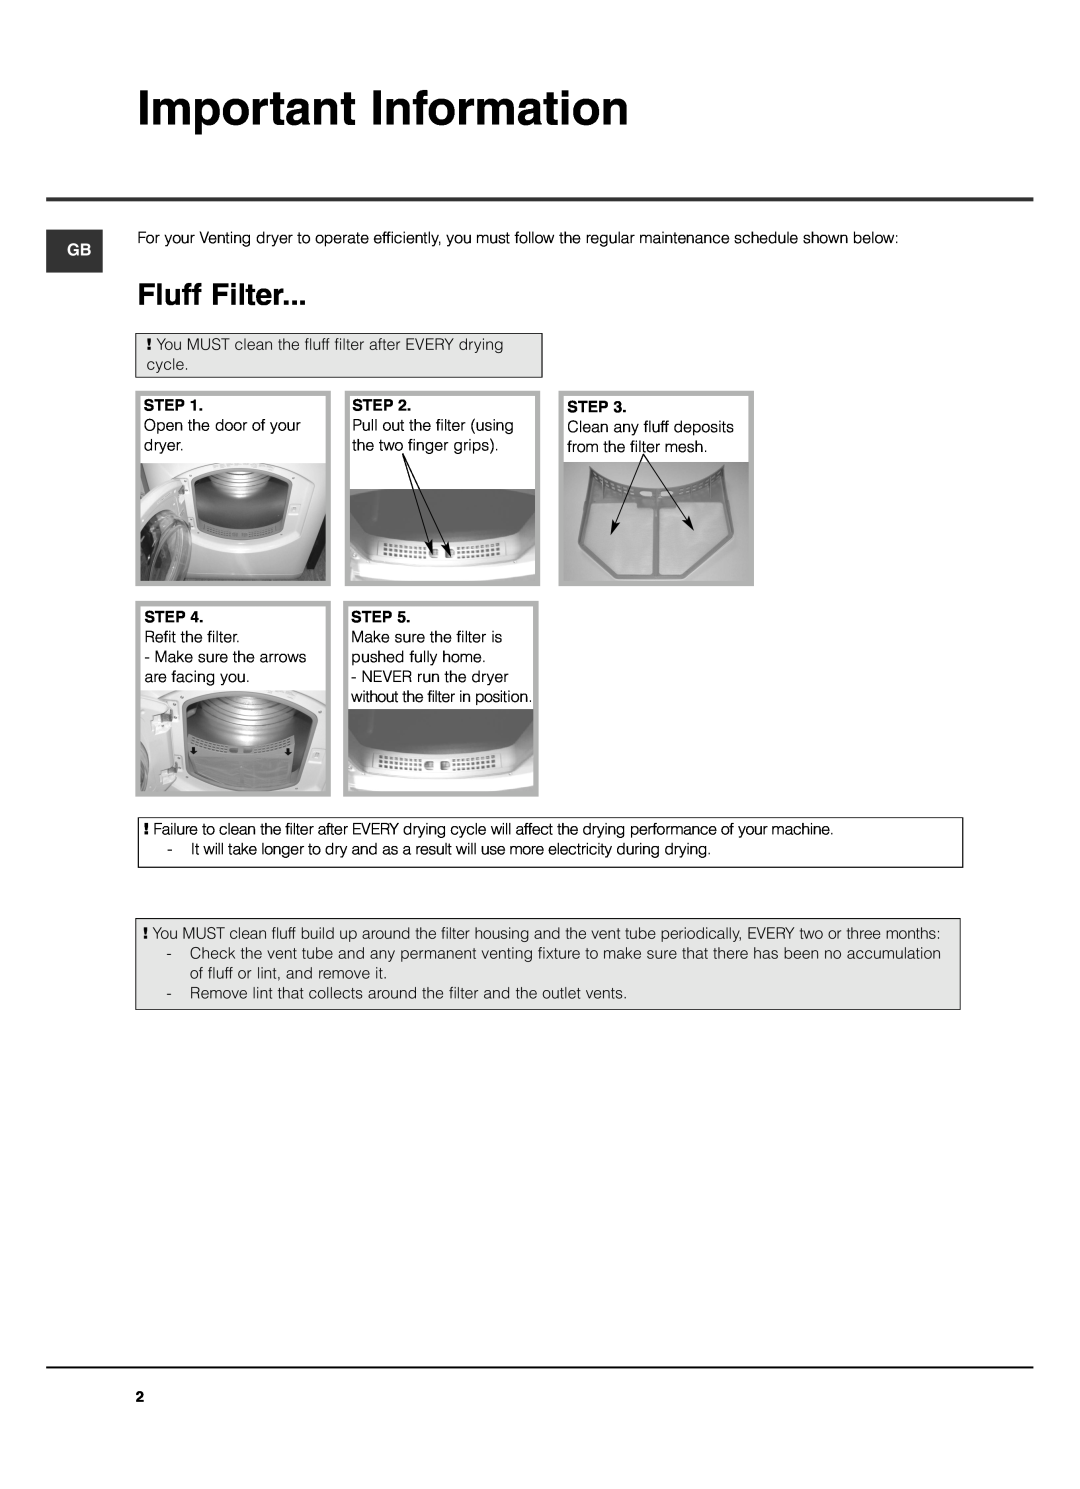 Hotpoint TVF770 manual Important Information, Fluff Filter 